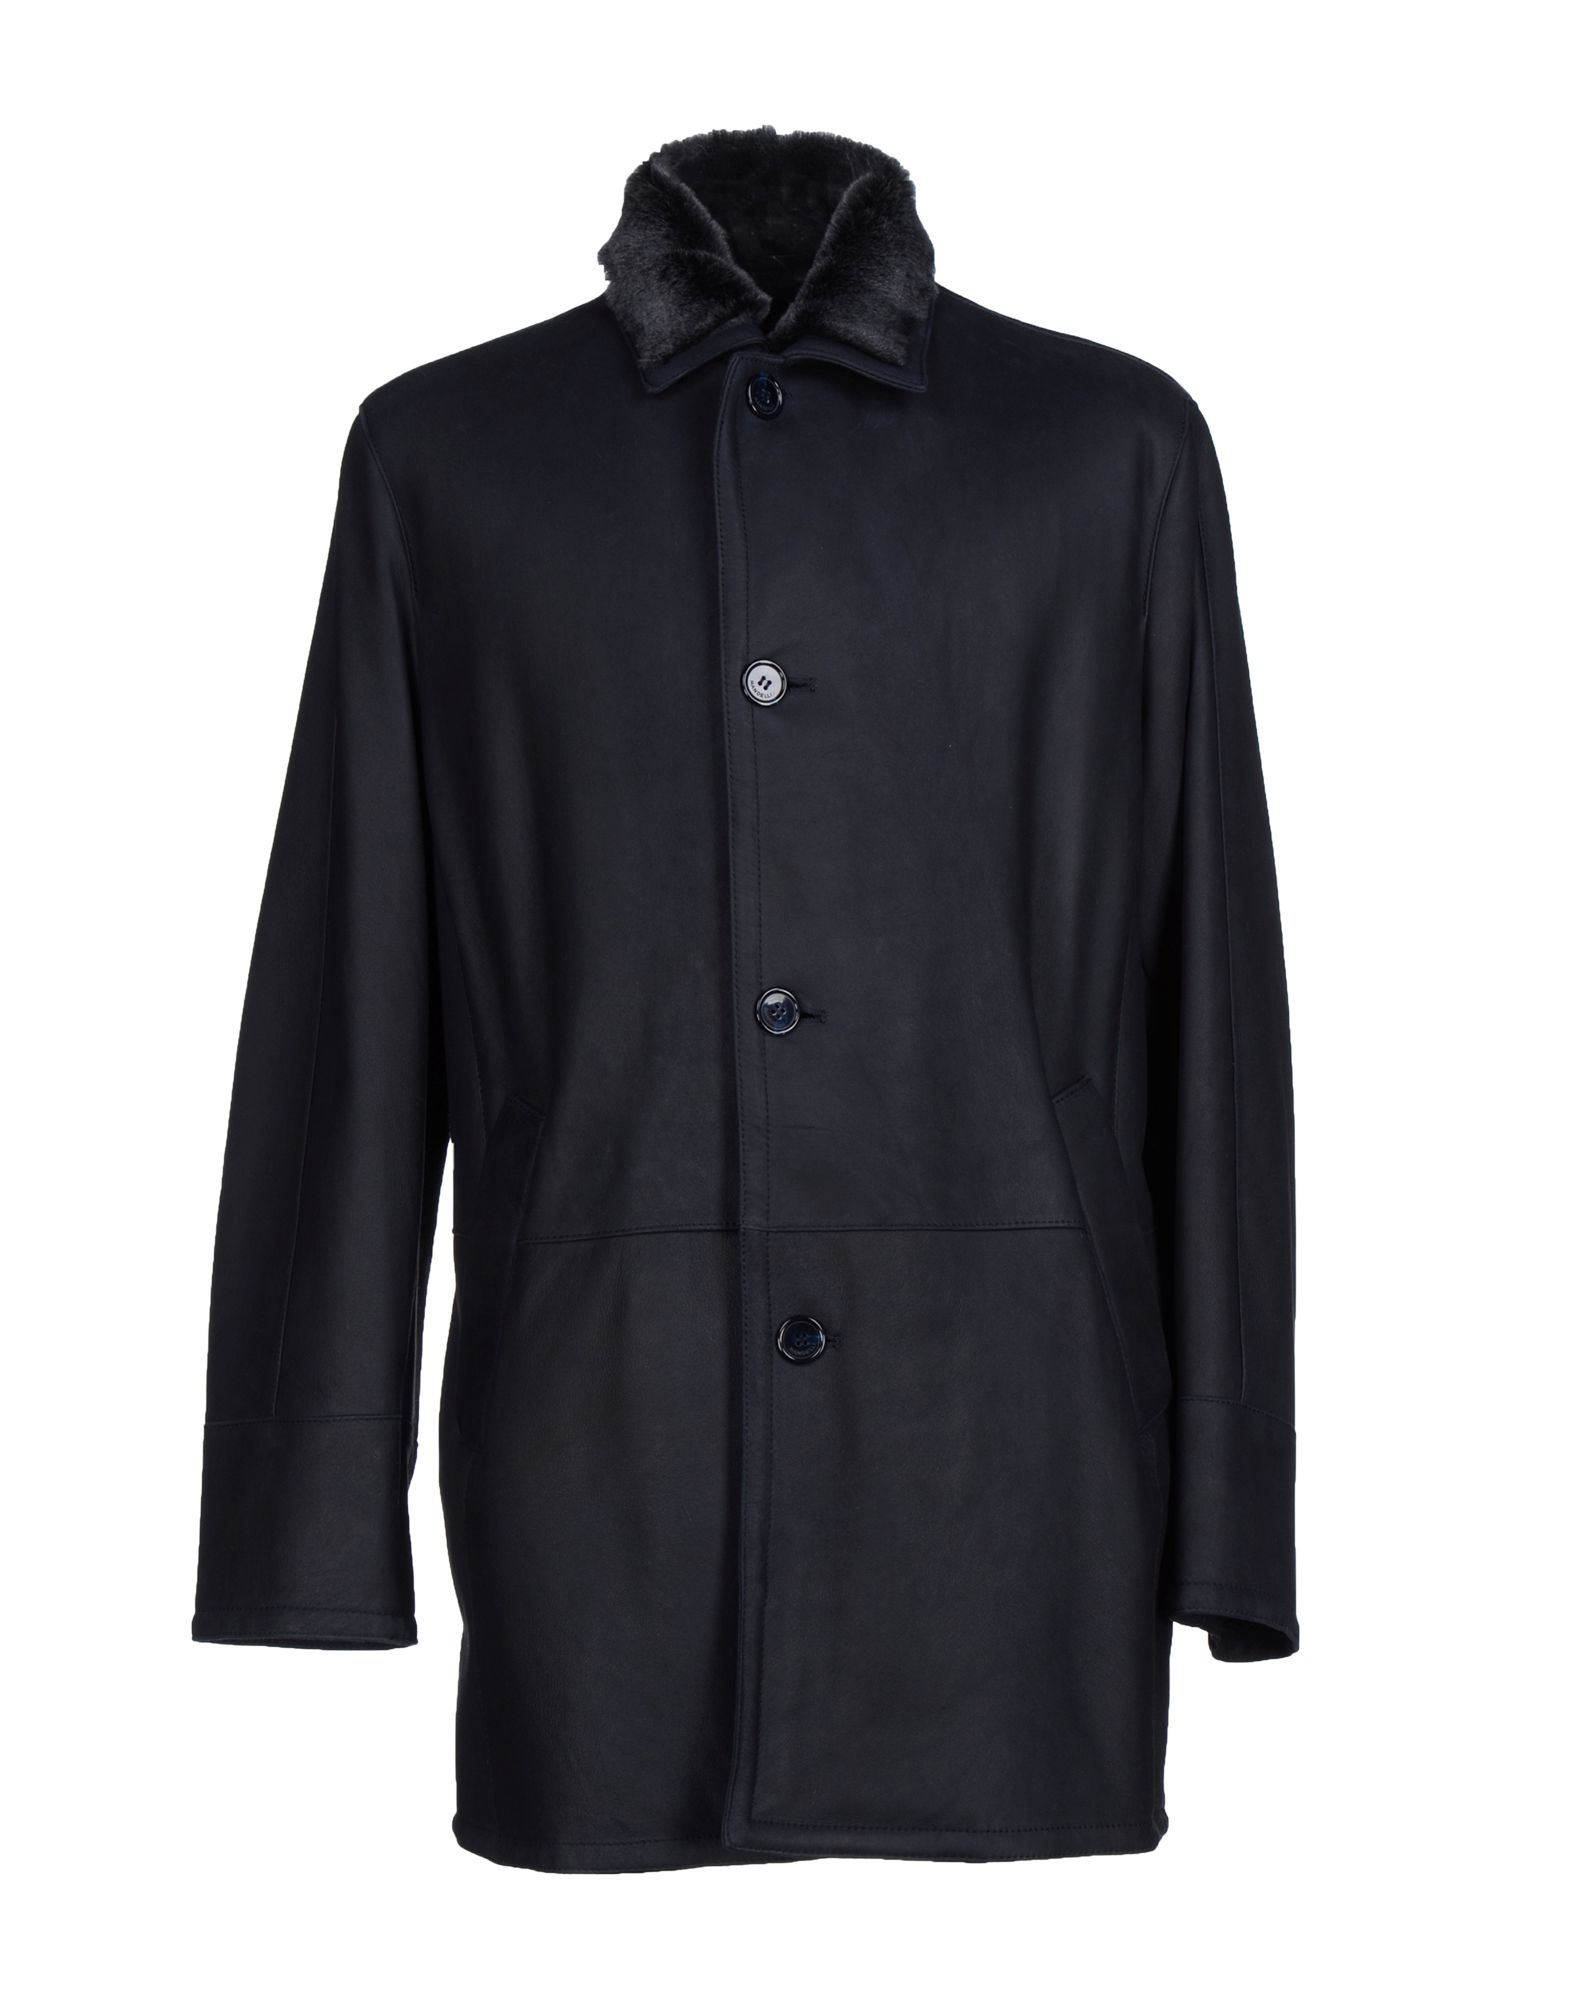 Lyst - Enrico Mandelli Coat in Black for Men